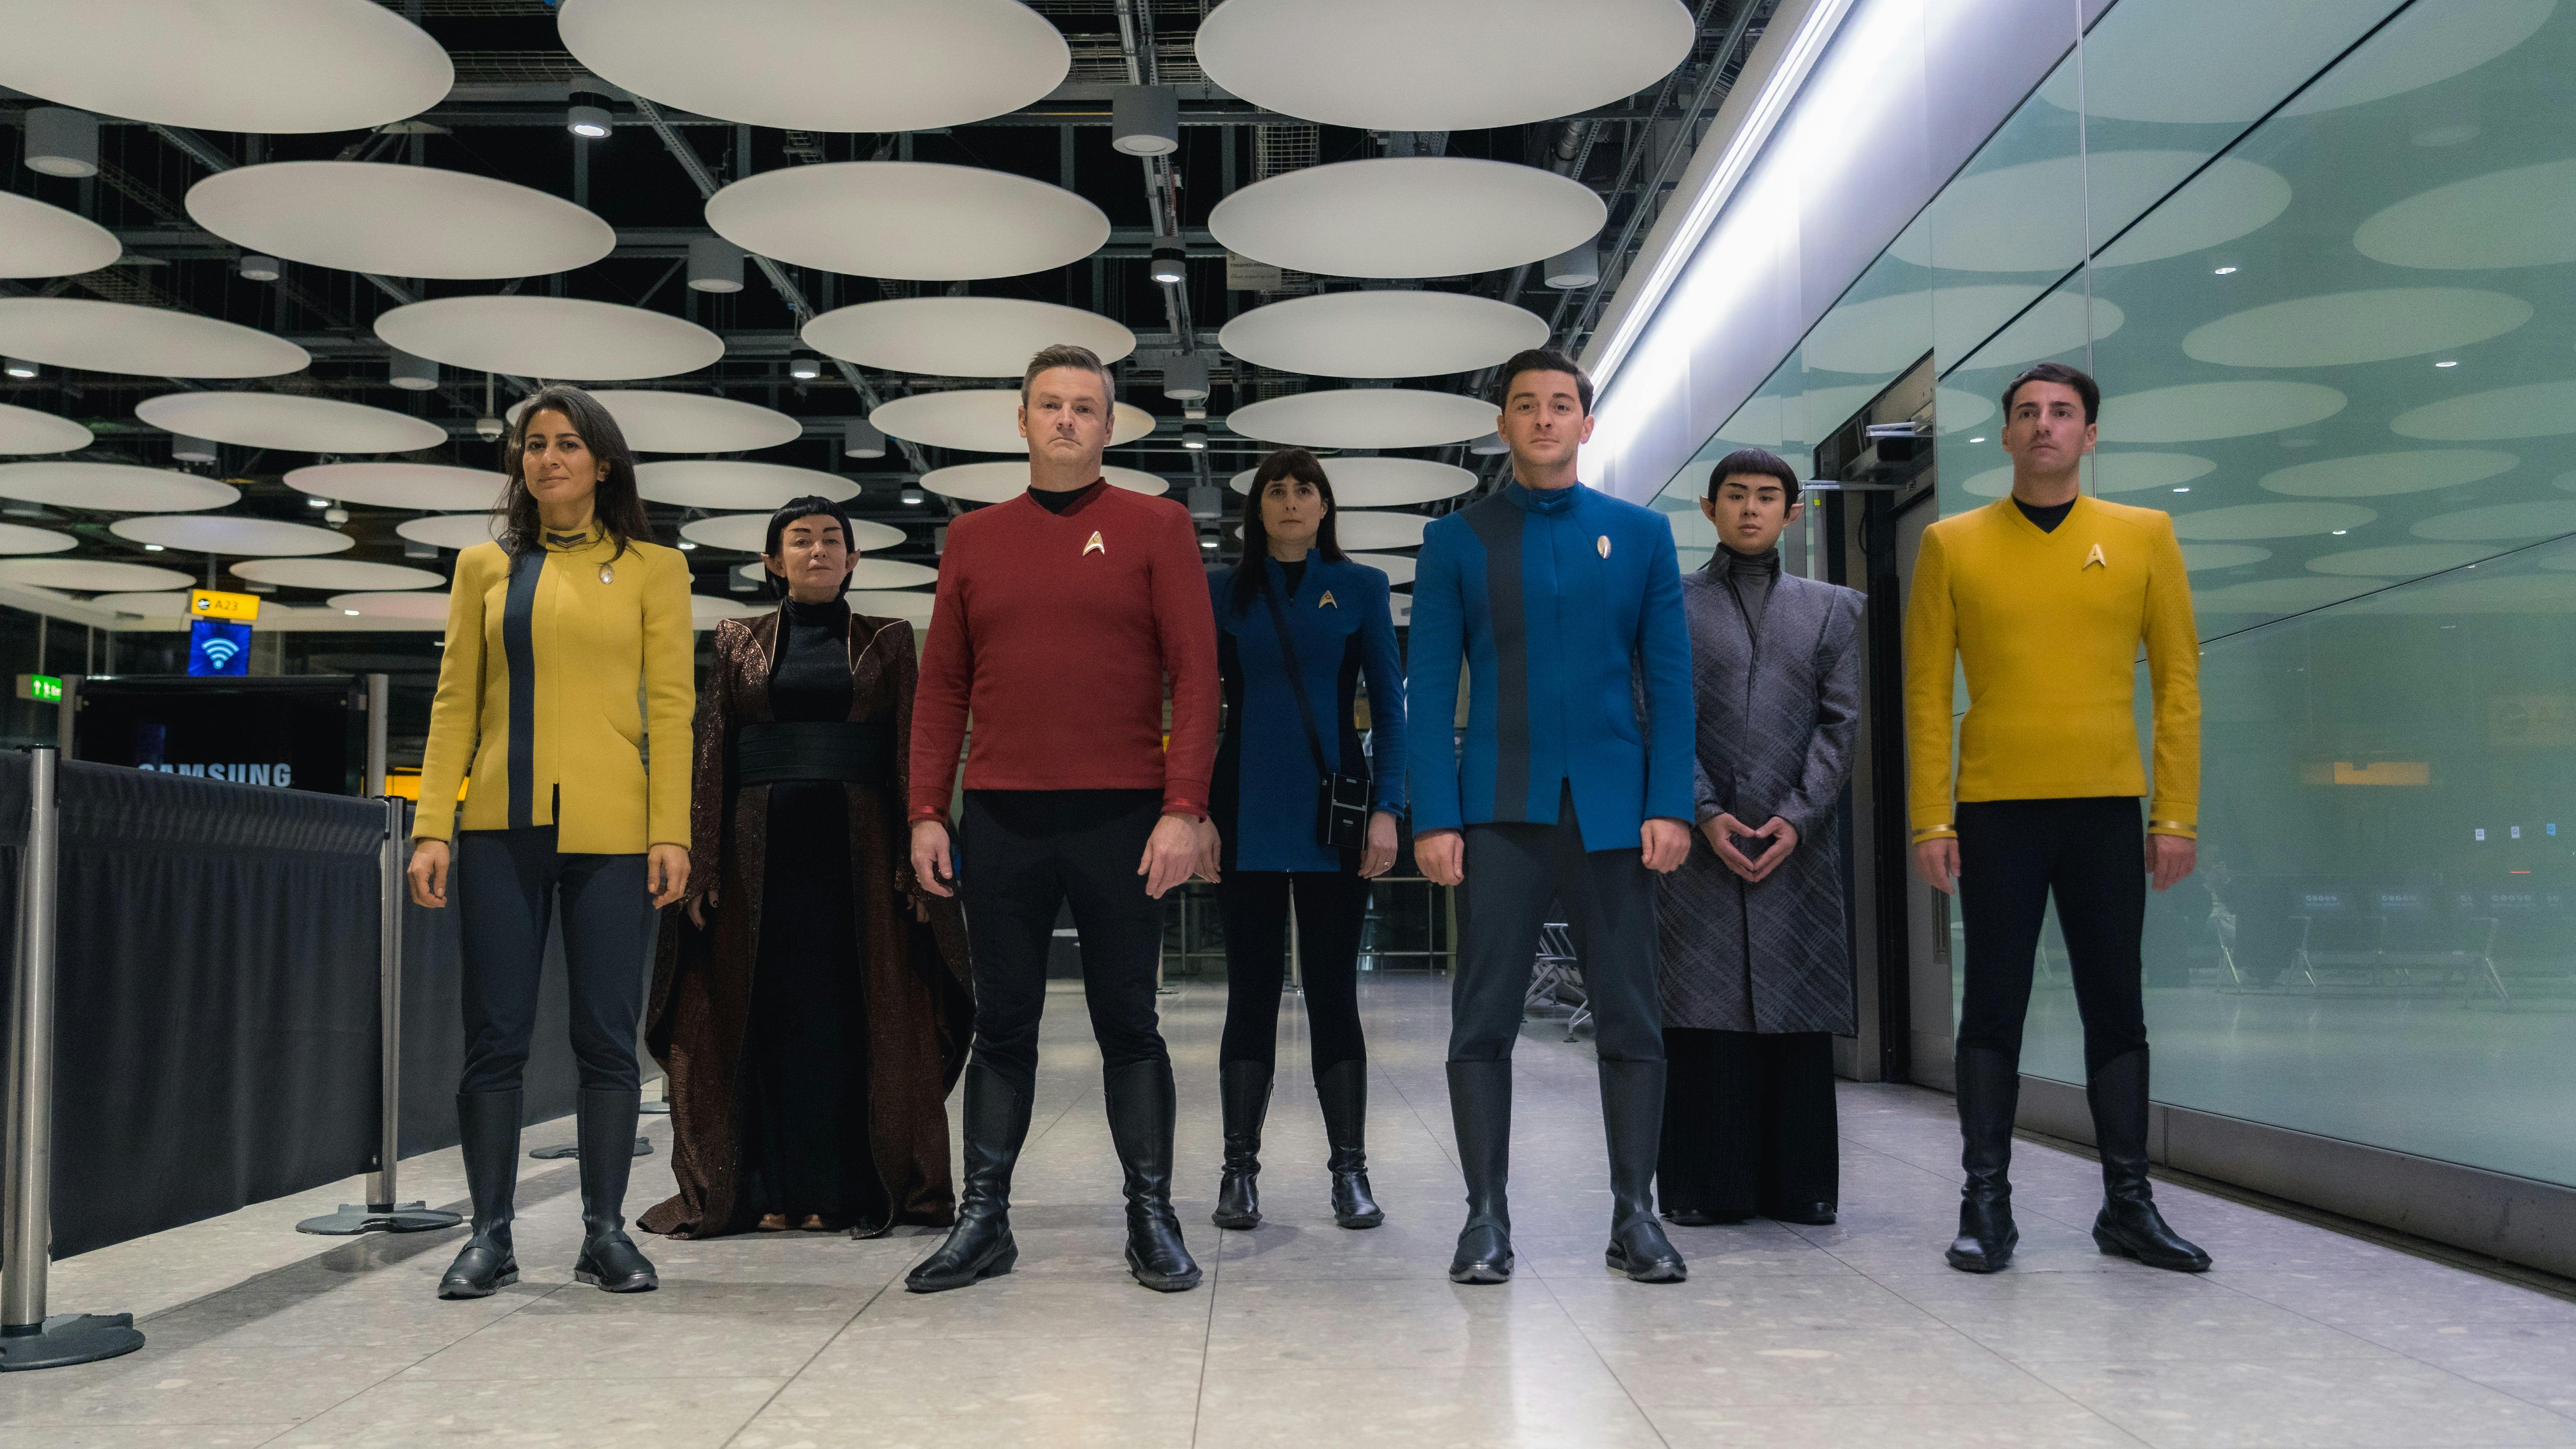 British Airways employees dressed as Star Trek Starfleet passengers at Heathrow Airport